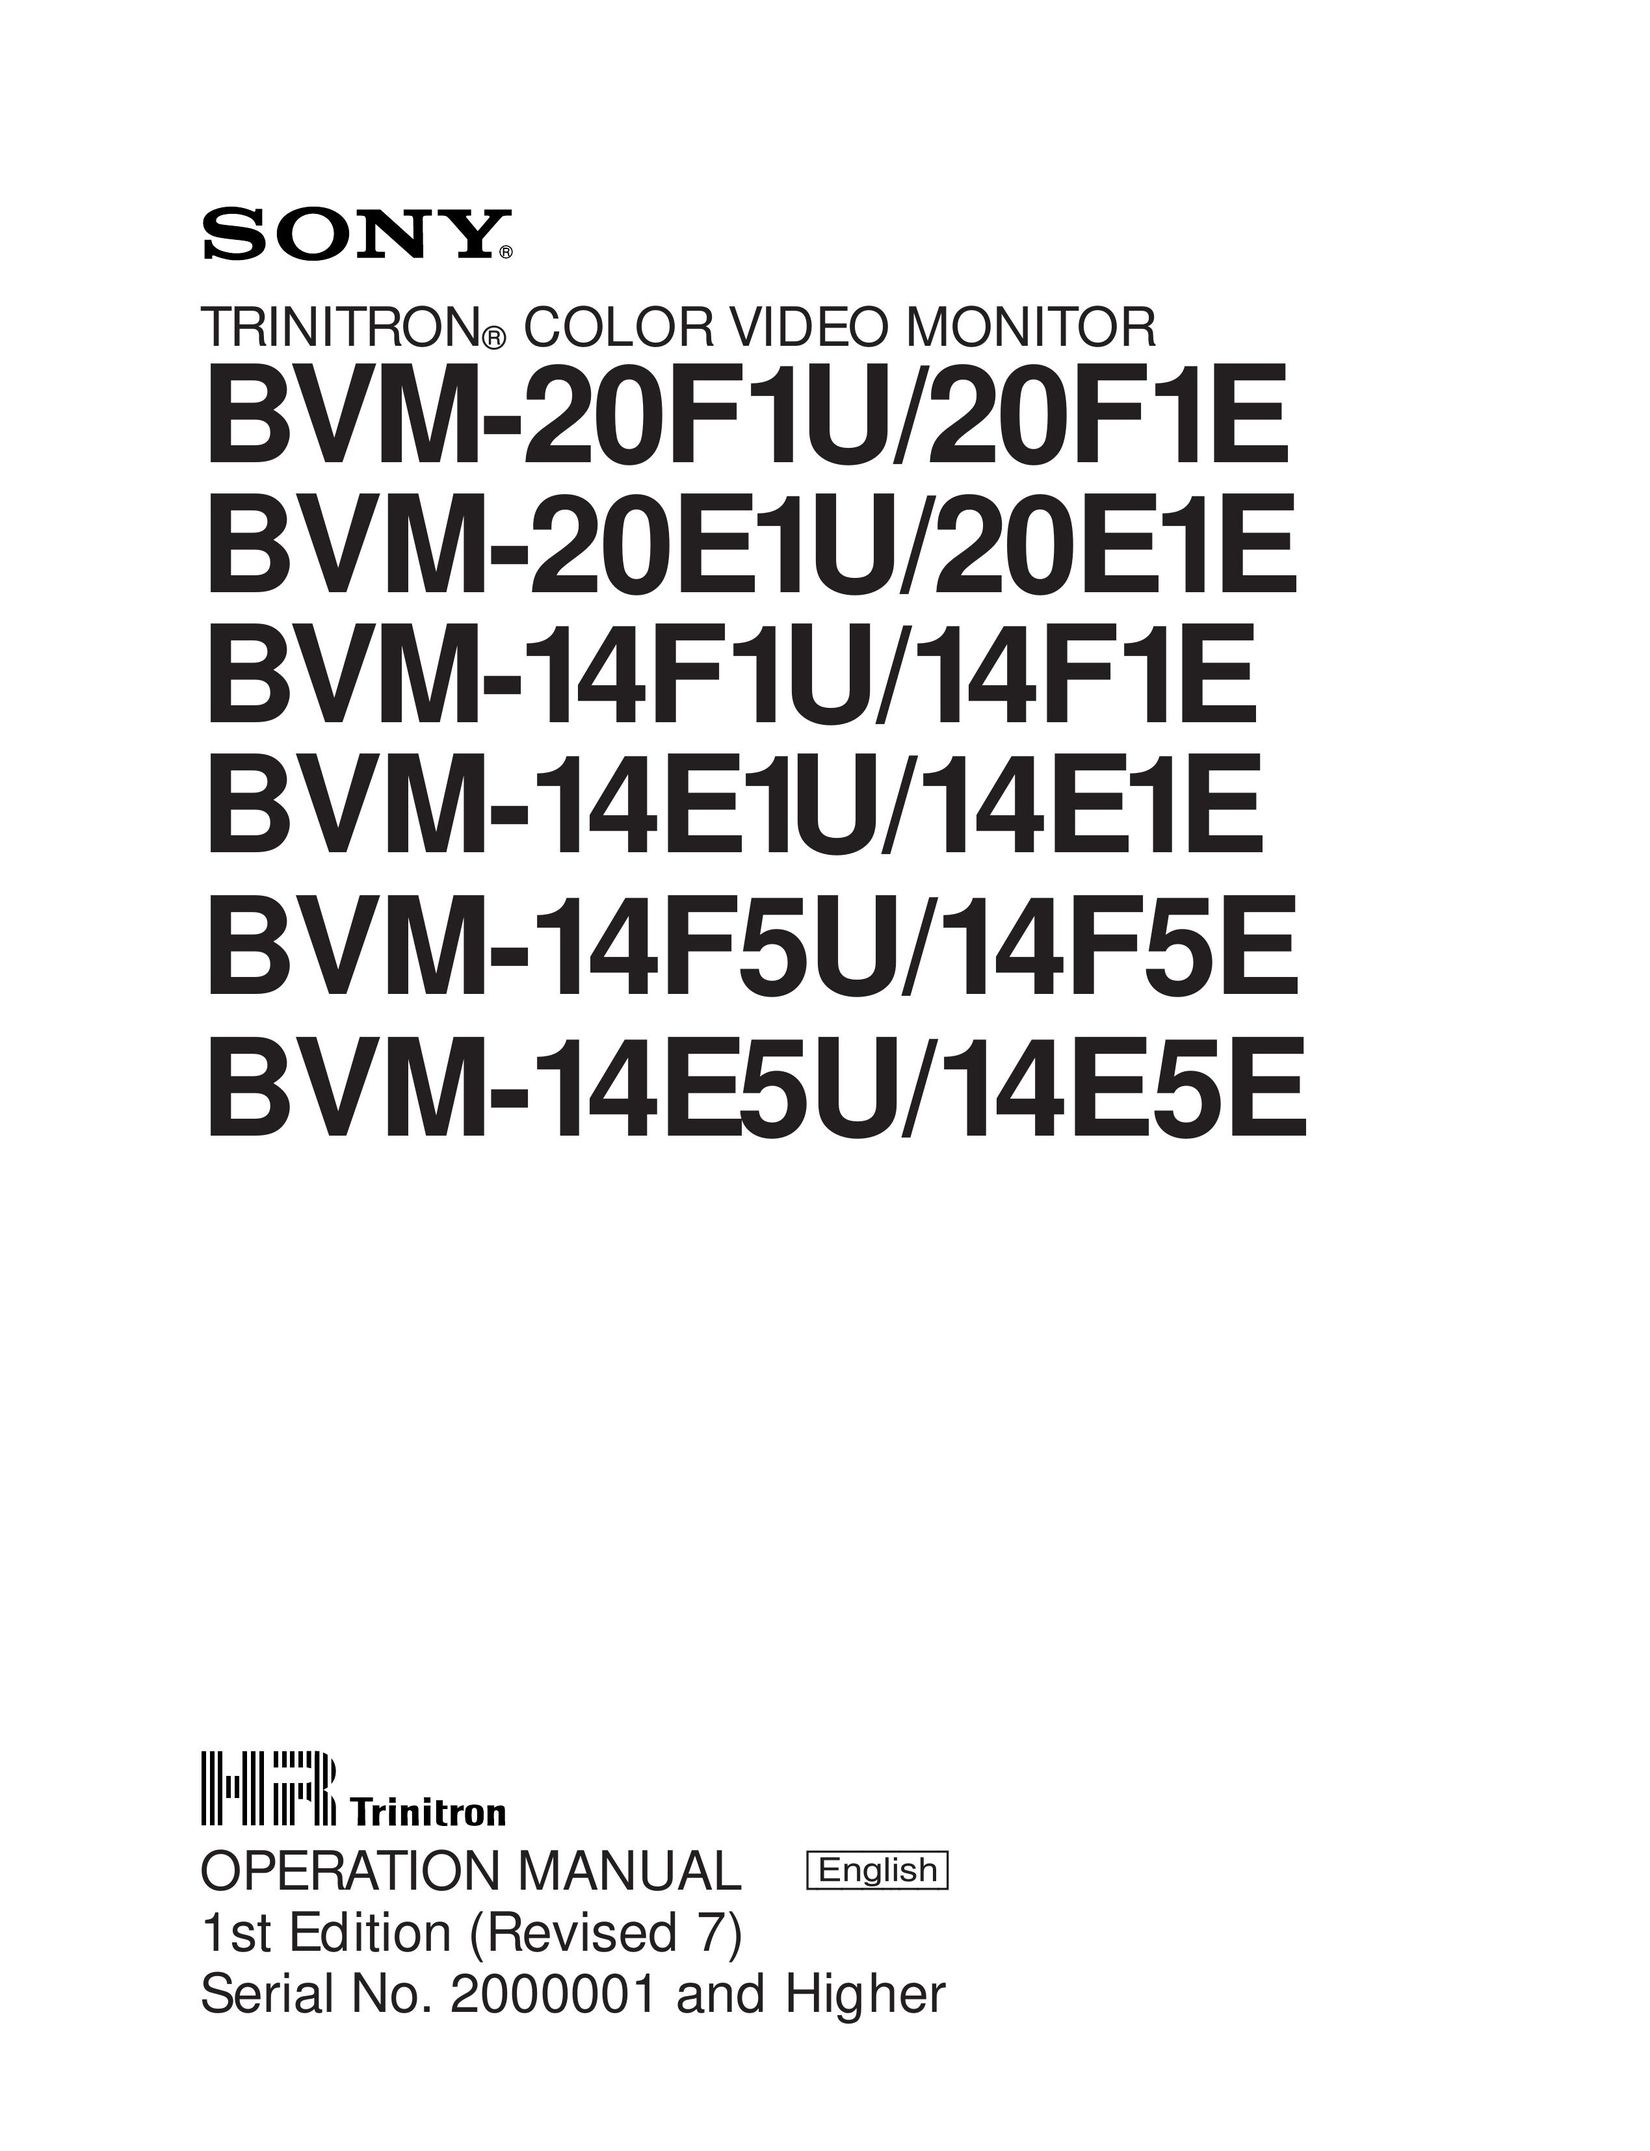 Sony BVM-20F1U, BVM-20F1E, BVM-20E1U, BVM-20E1E, BVM-14F1U, BVM-14F1E, BVM-14E1U, BVM-14E1E, BVM-14F5U, BVM-14F5E, BVM-14E5U, BVM-14E5E Computer Monitor User Manual